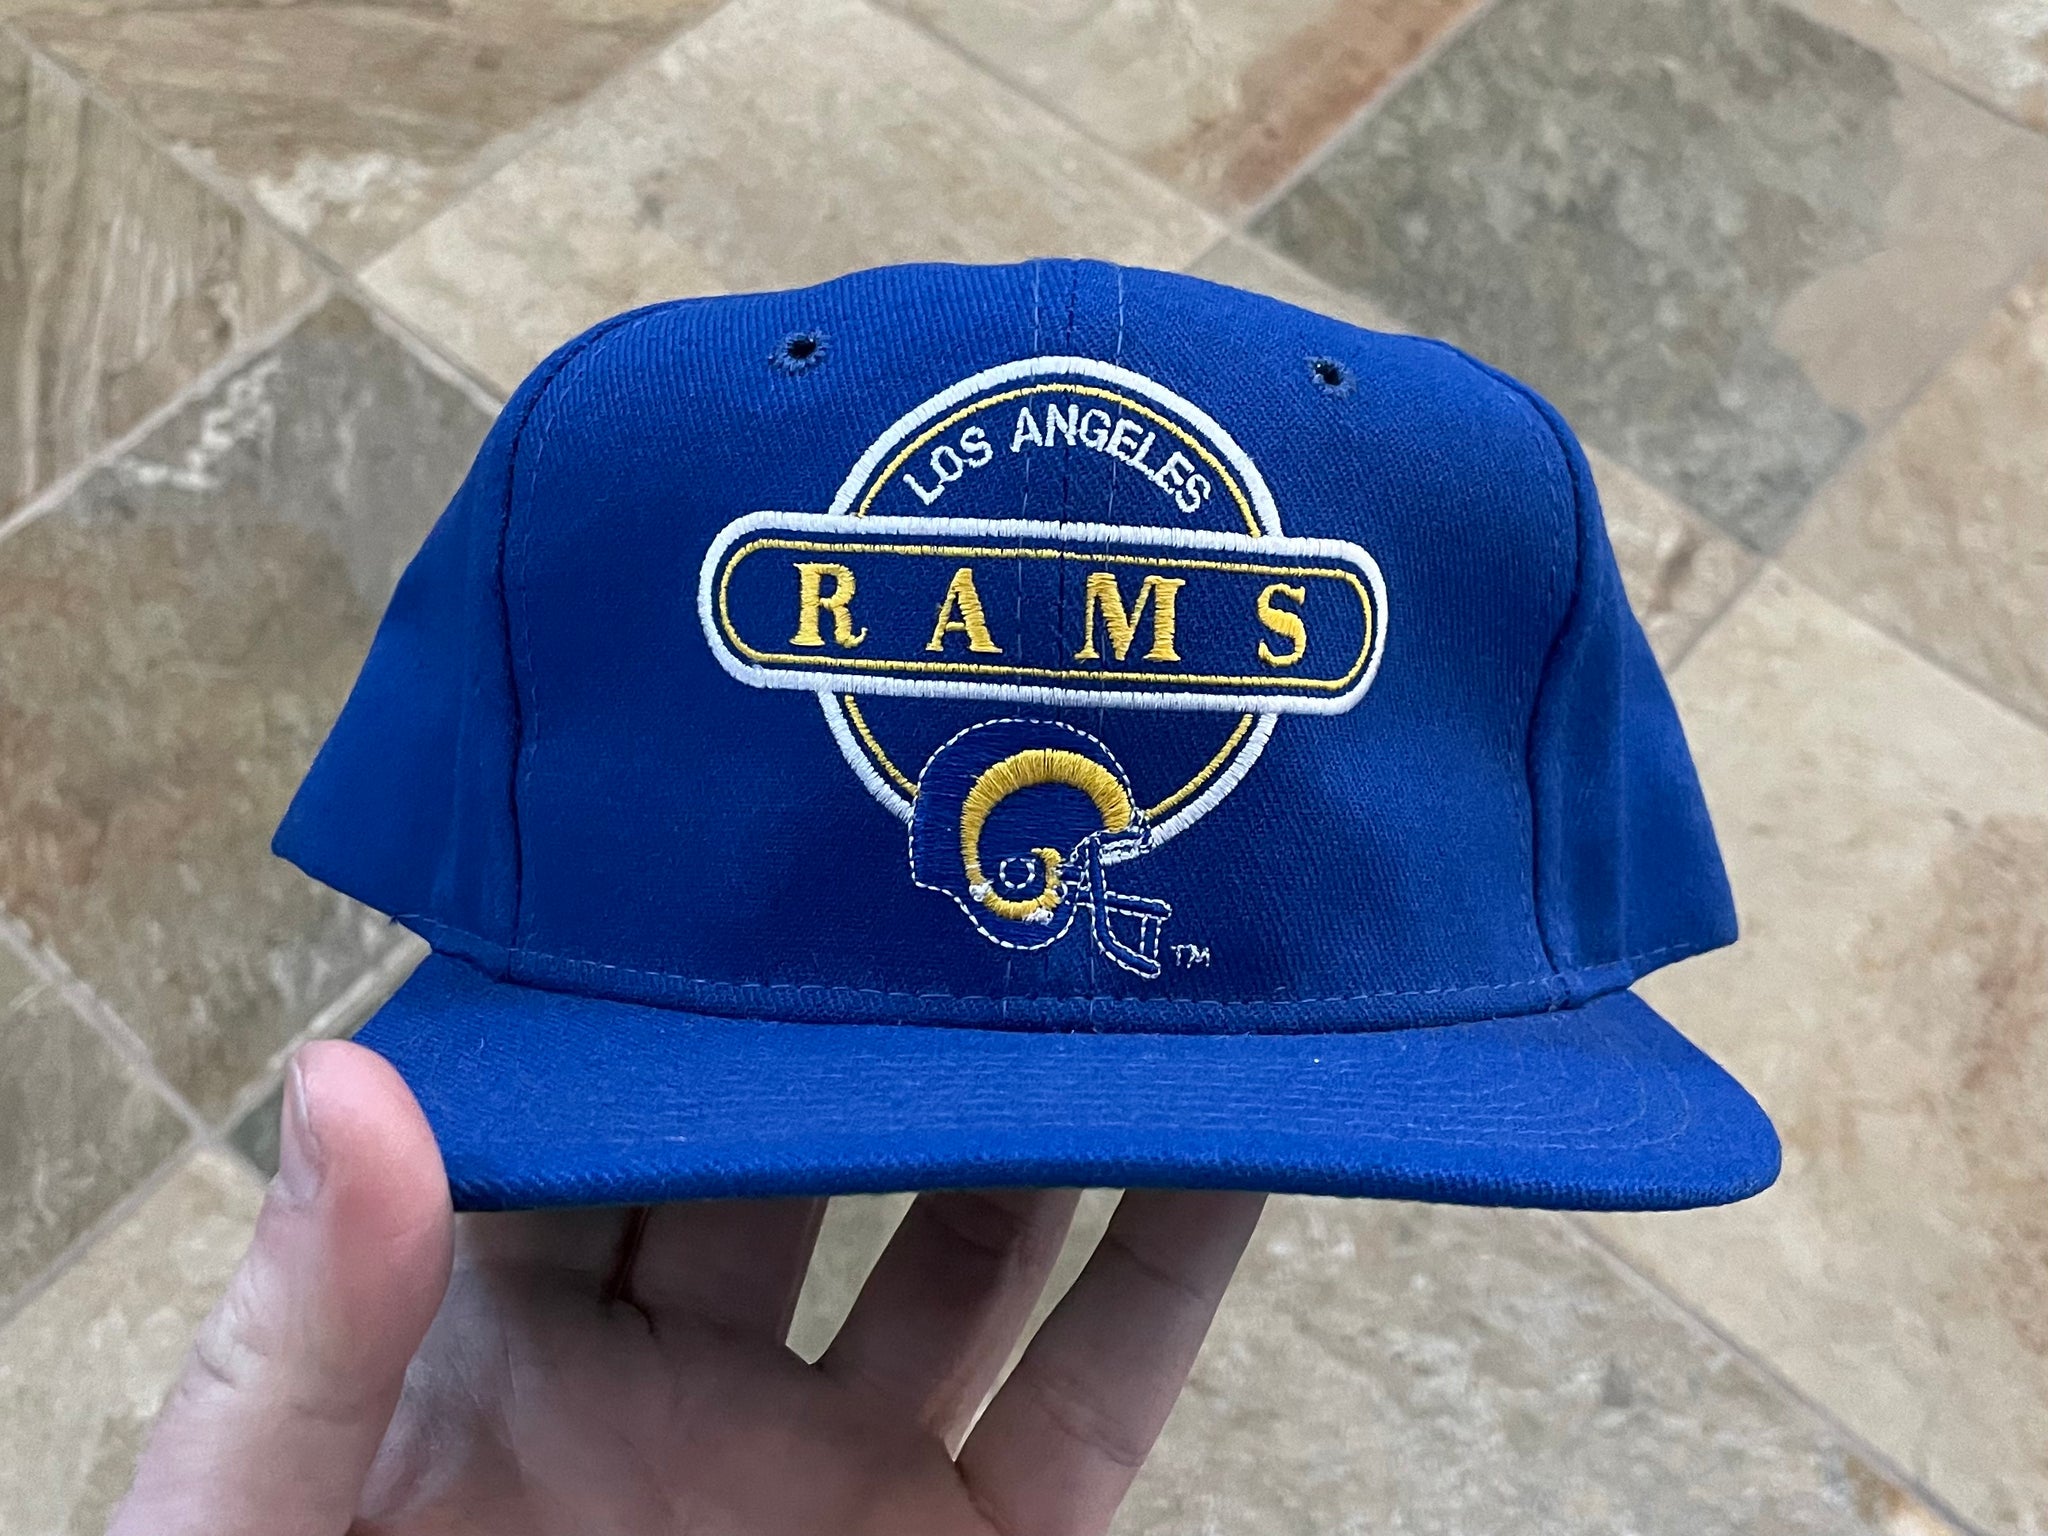 la rams throwback hat